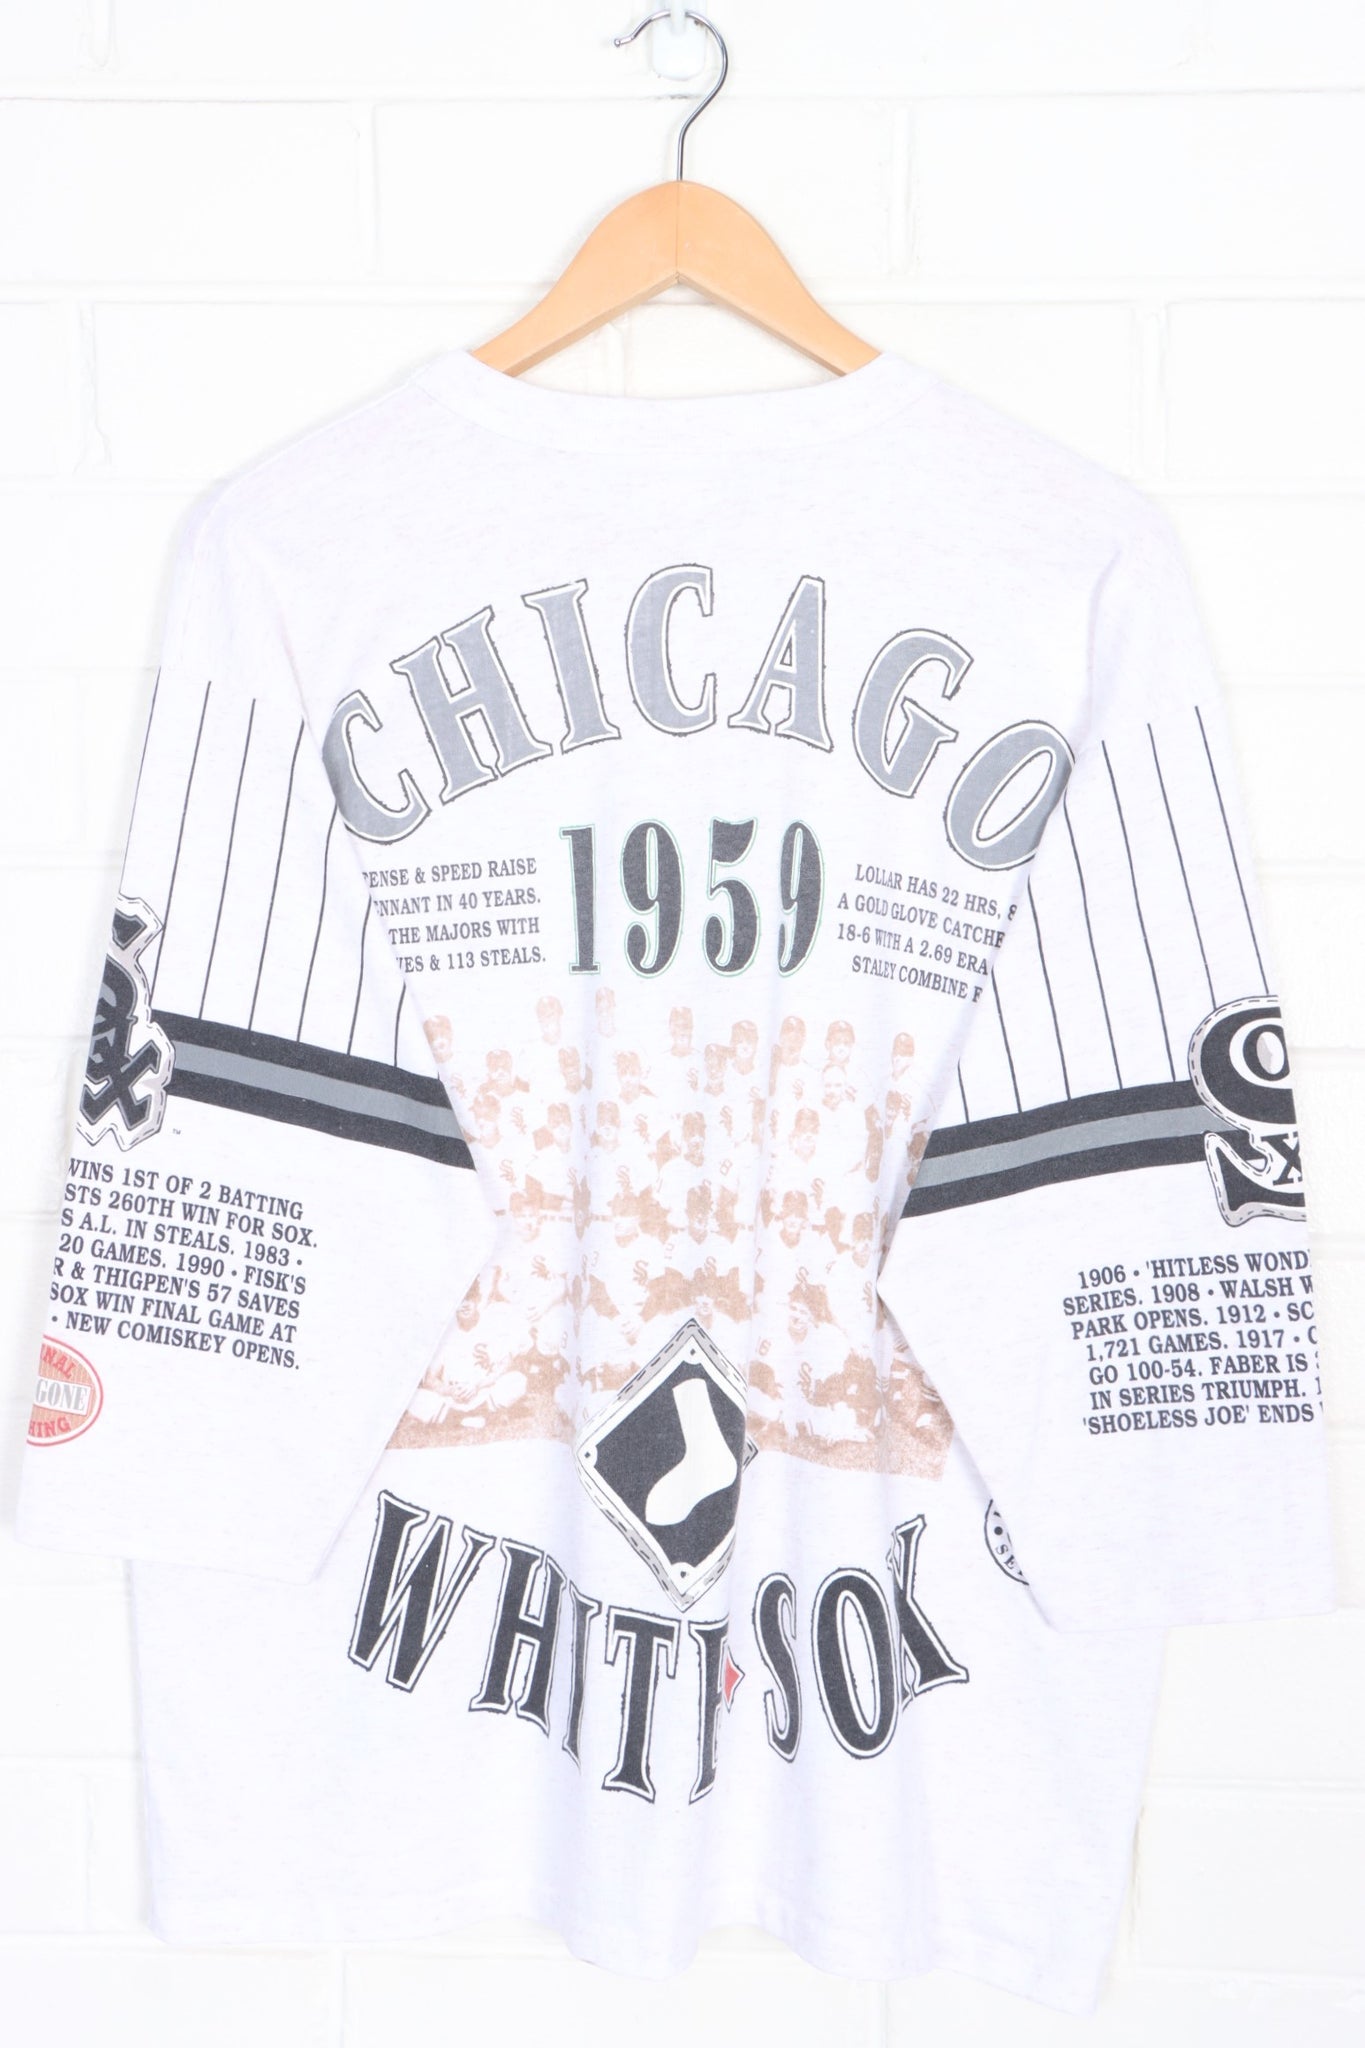 1906 white sox jersey